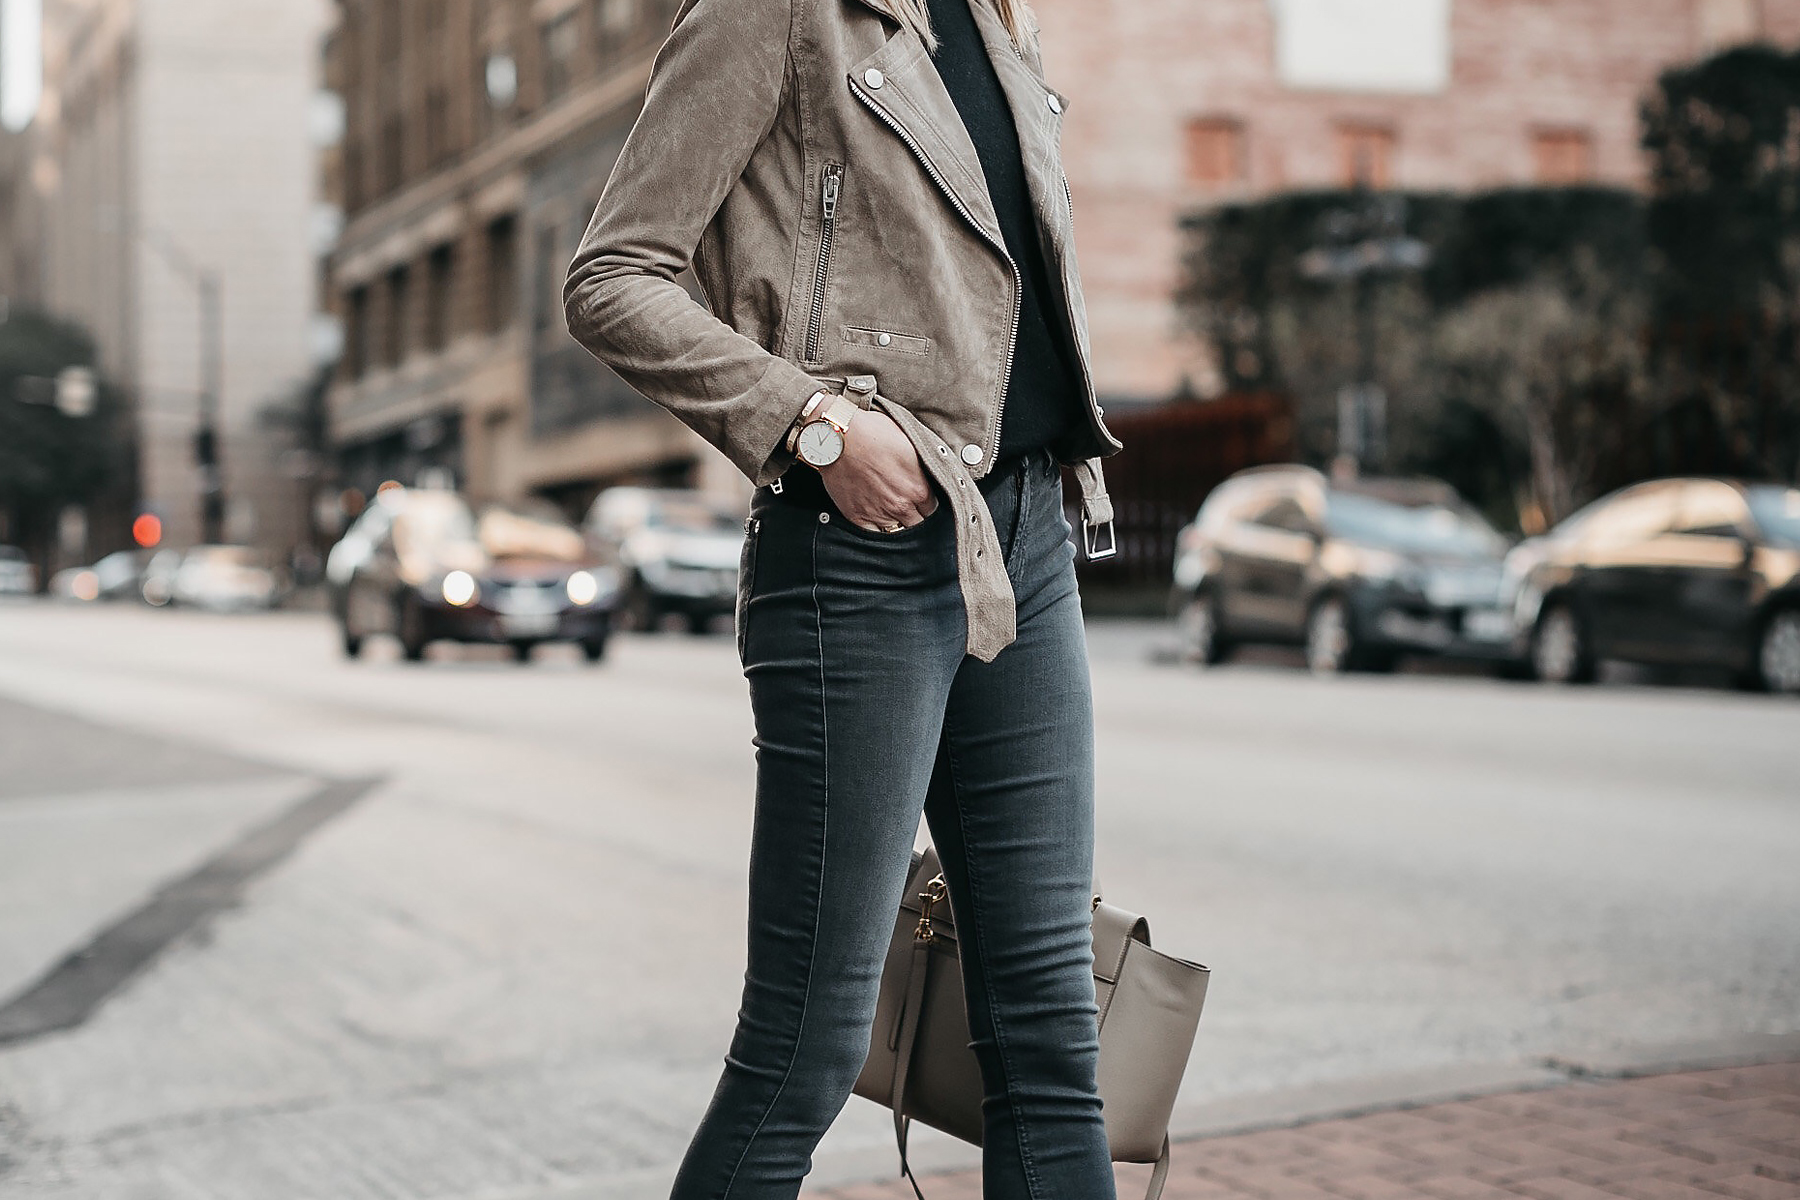 Blanknyc Suede Moto Jacket Black Sweater 7 For All Mankind Grey Skinny Jeans Fashion Jackson Dallas Blogger Fashion Blogger Street Style